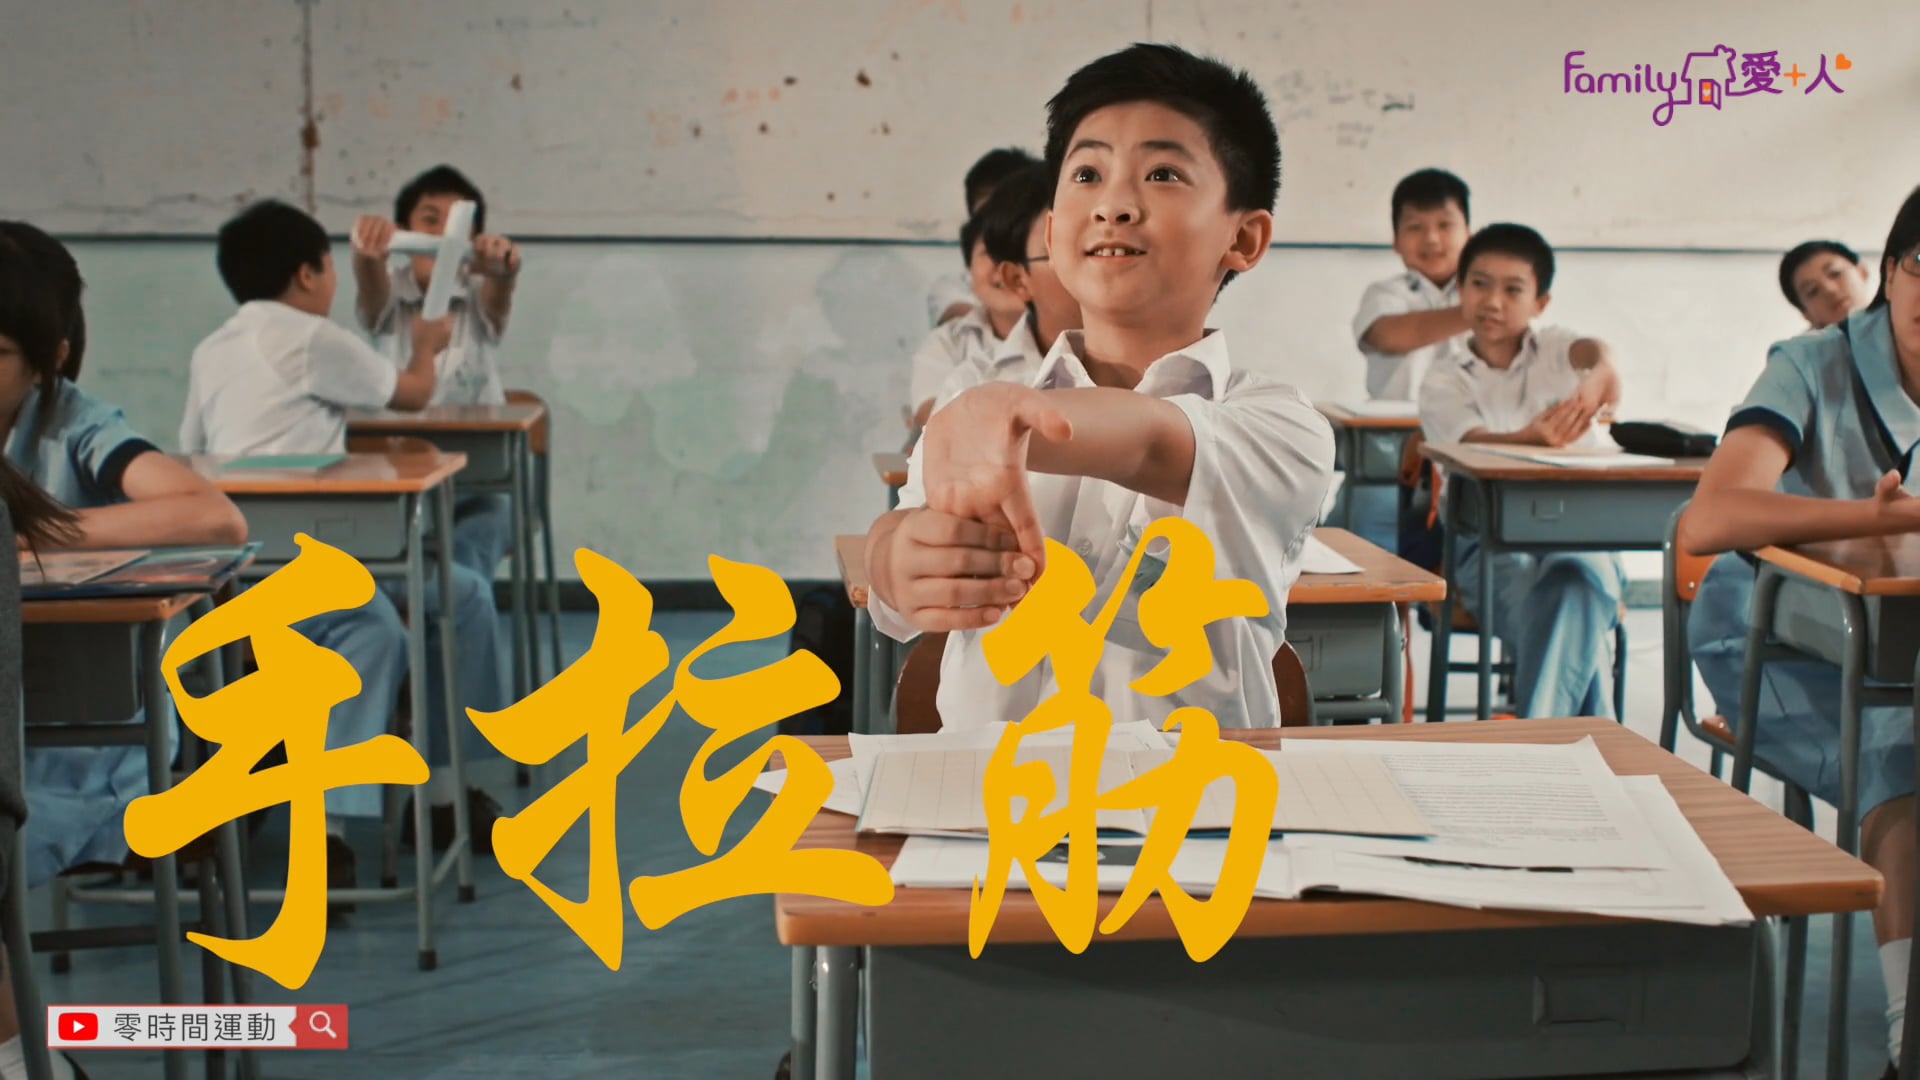 賽馬會「愛 + 人」計劃 / The Hong Kong Jockey Club, HKU - FAMILY Project   [EP: Classroom]